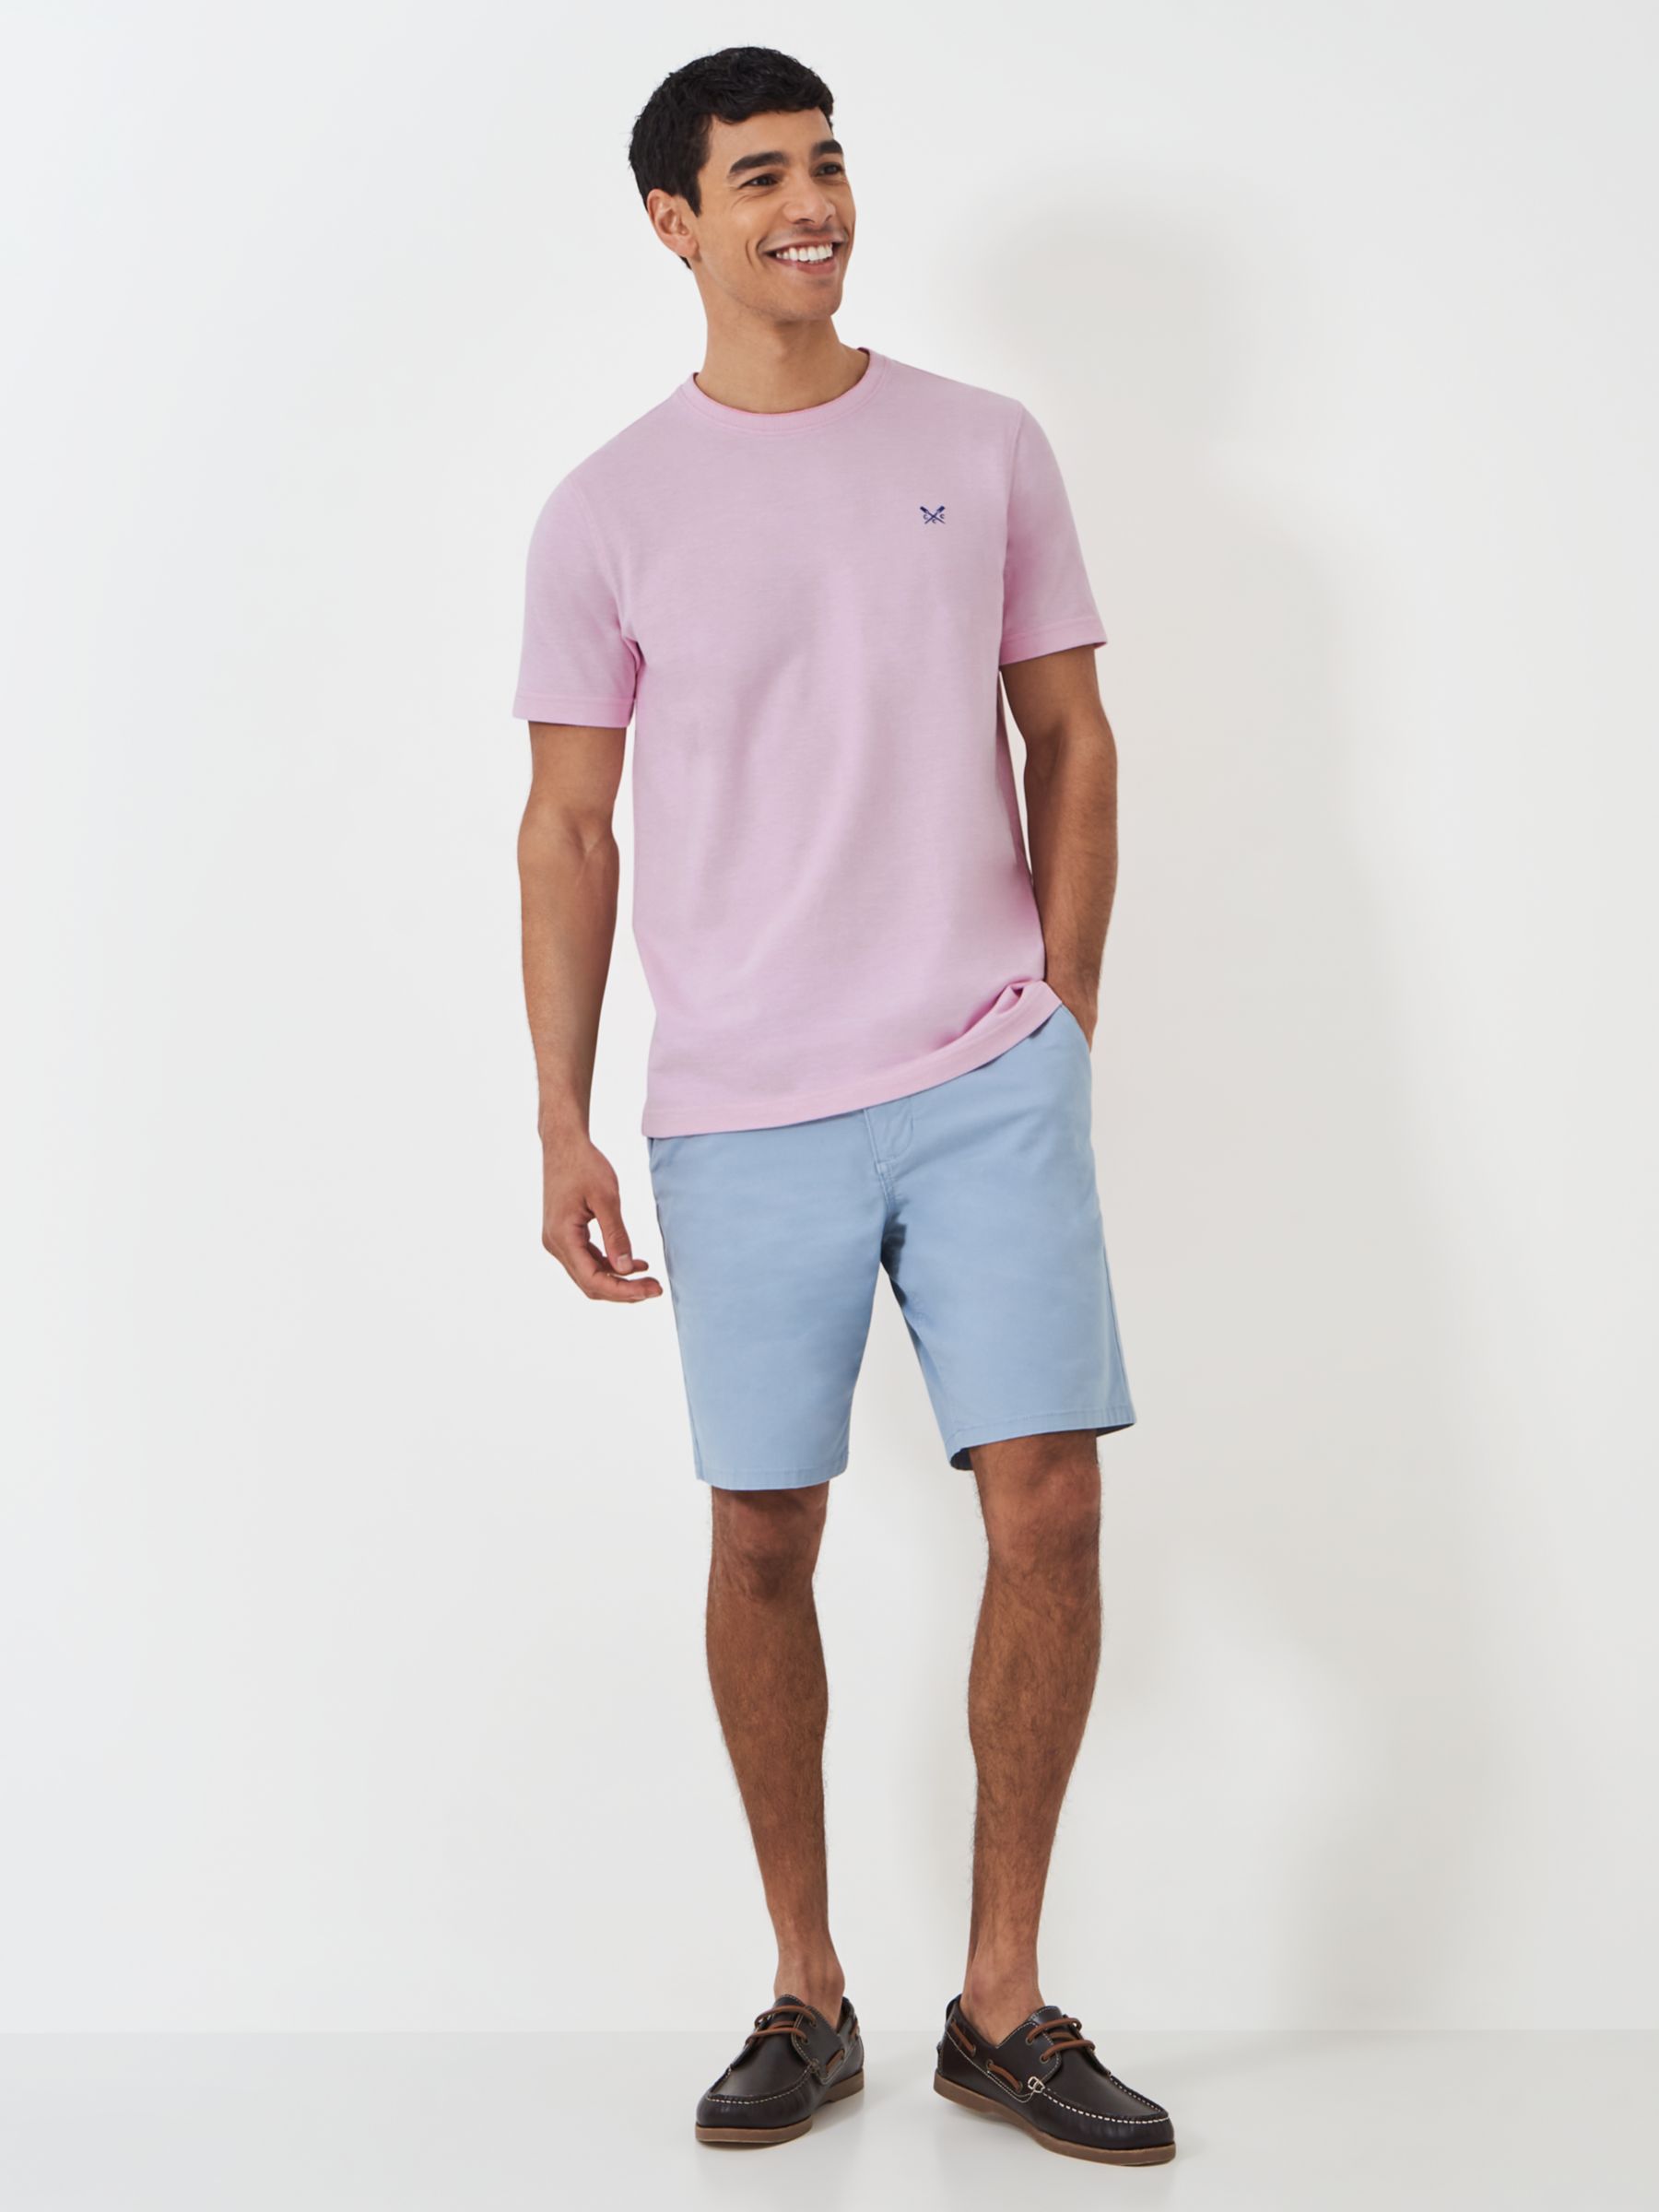 Crew Clothing Oxford Pique Short Sleeve T-Shirt, Light Pink, L